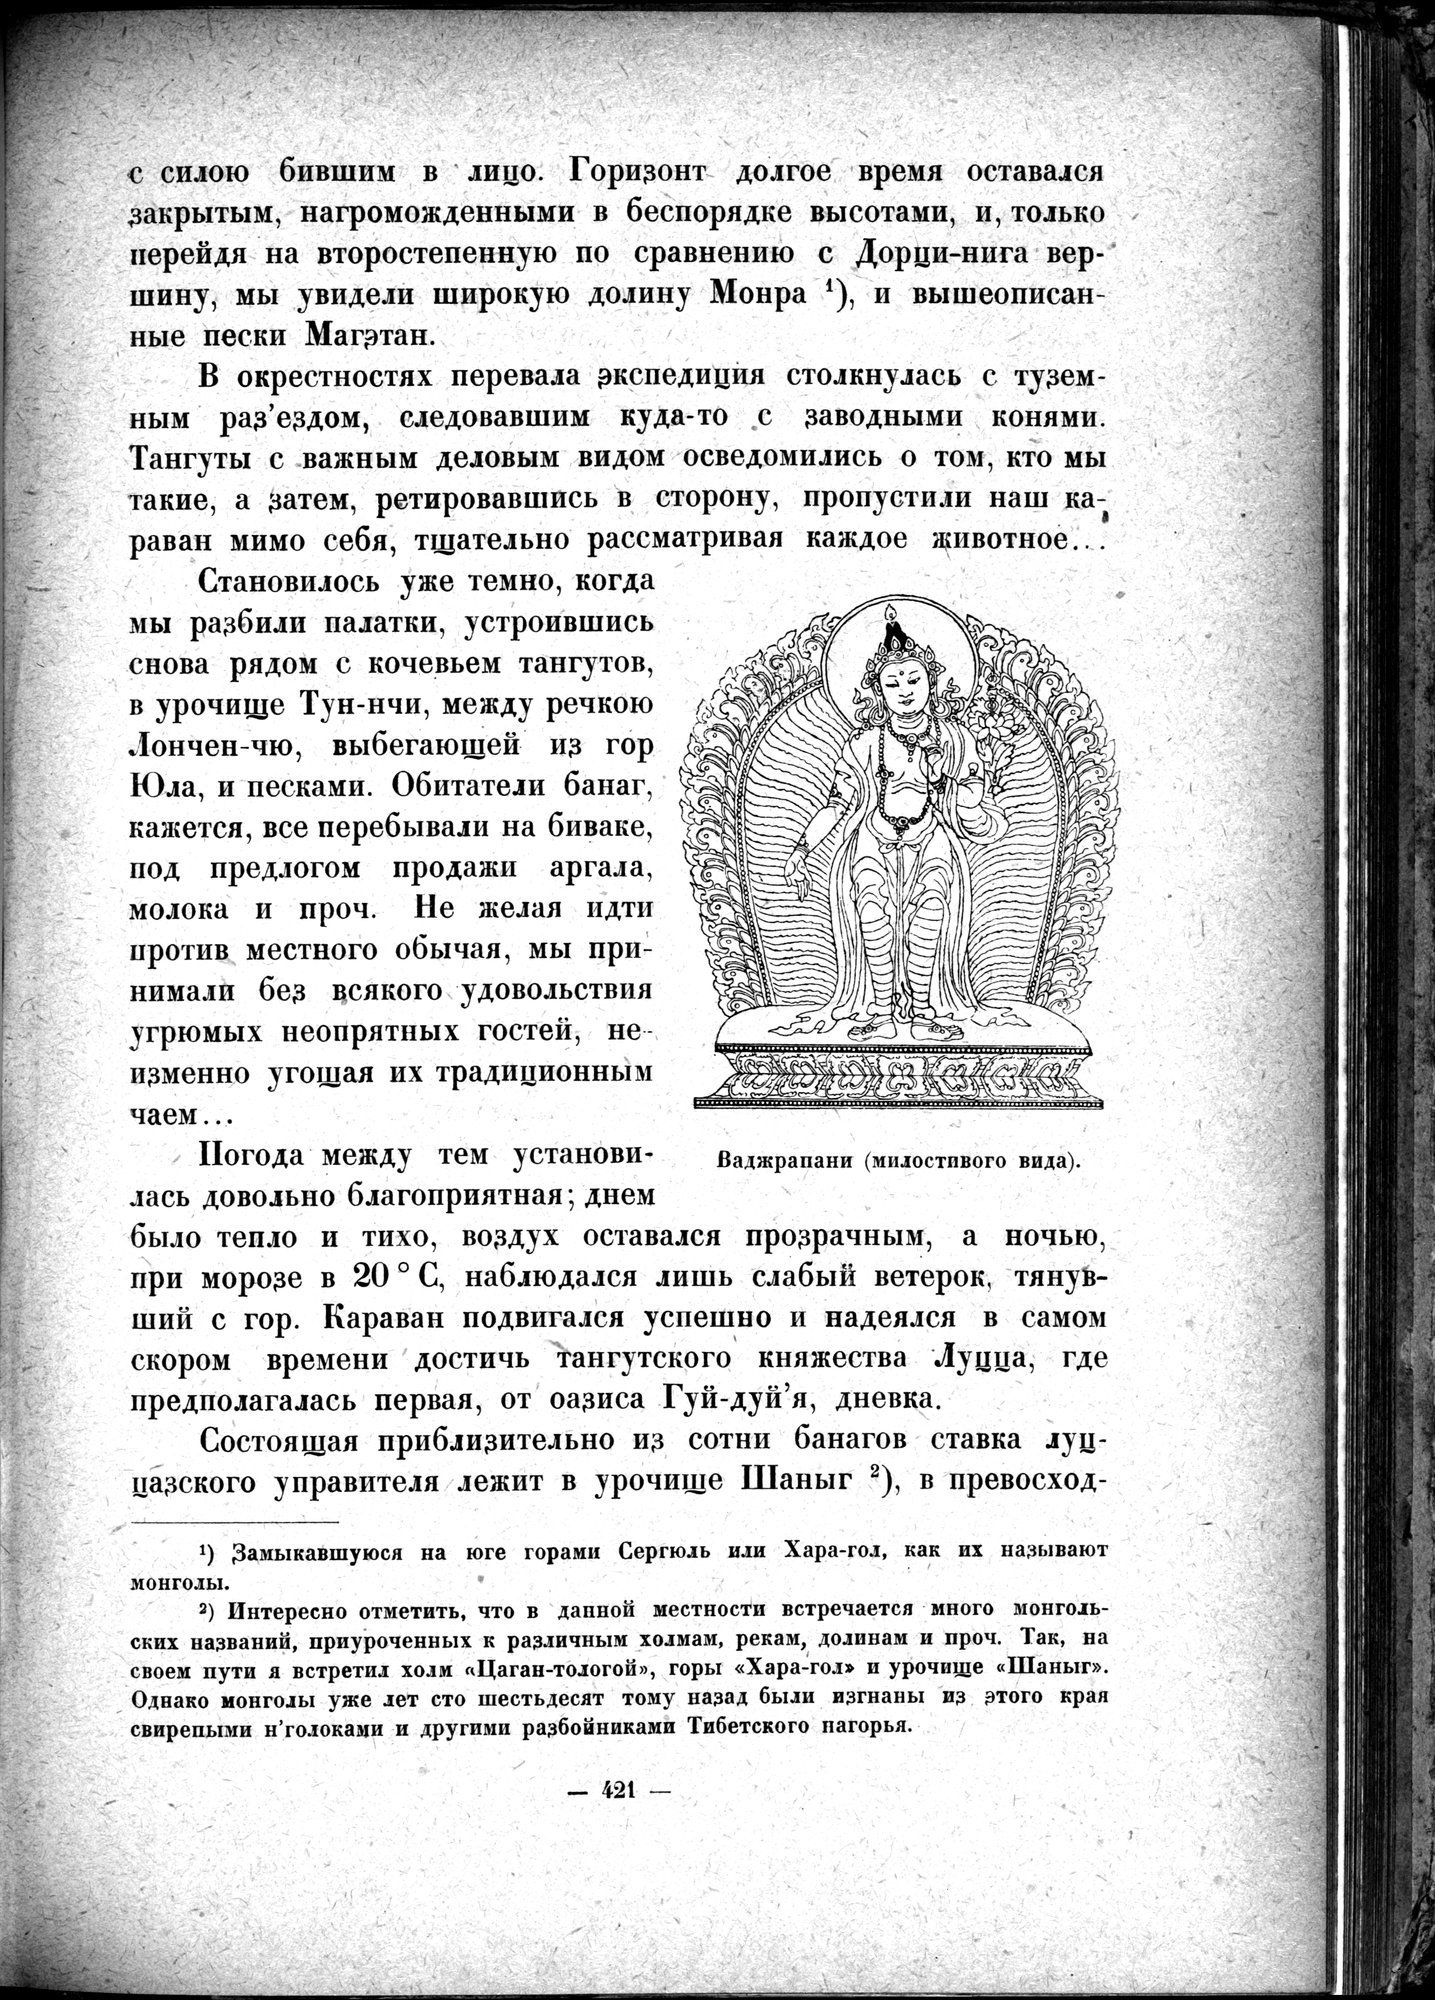 Mongoliya i Amdo i mertby gorod Khara-Khoto : vol.1 / Page 483 (Grayscale High Resolution Image)